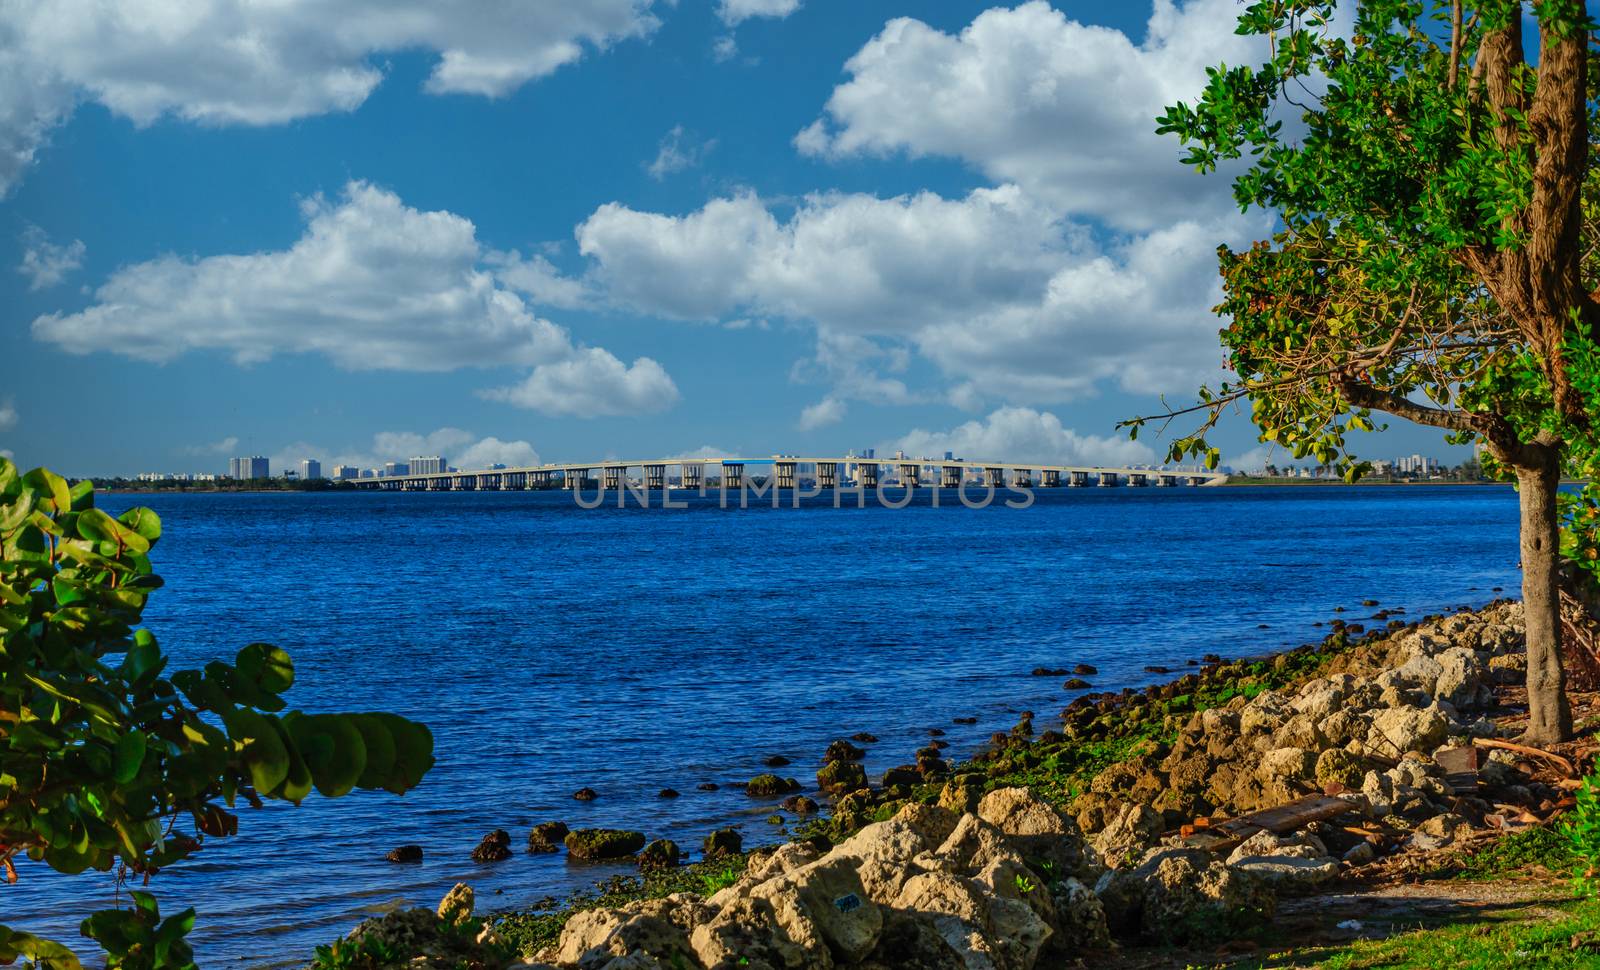 Bridge Across Biscayne Bay in Miami by dbvirago